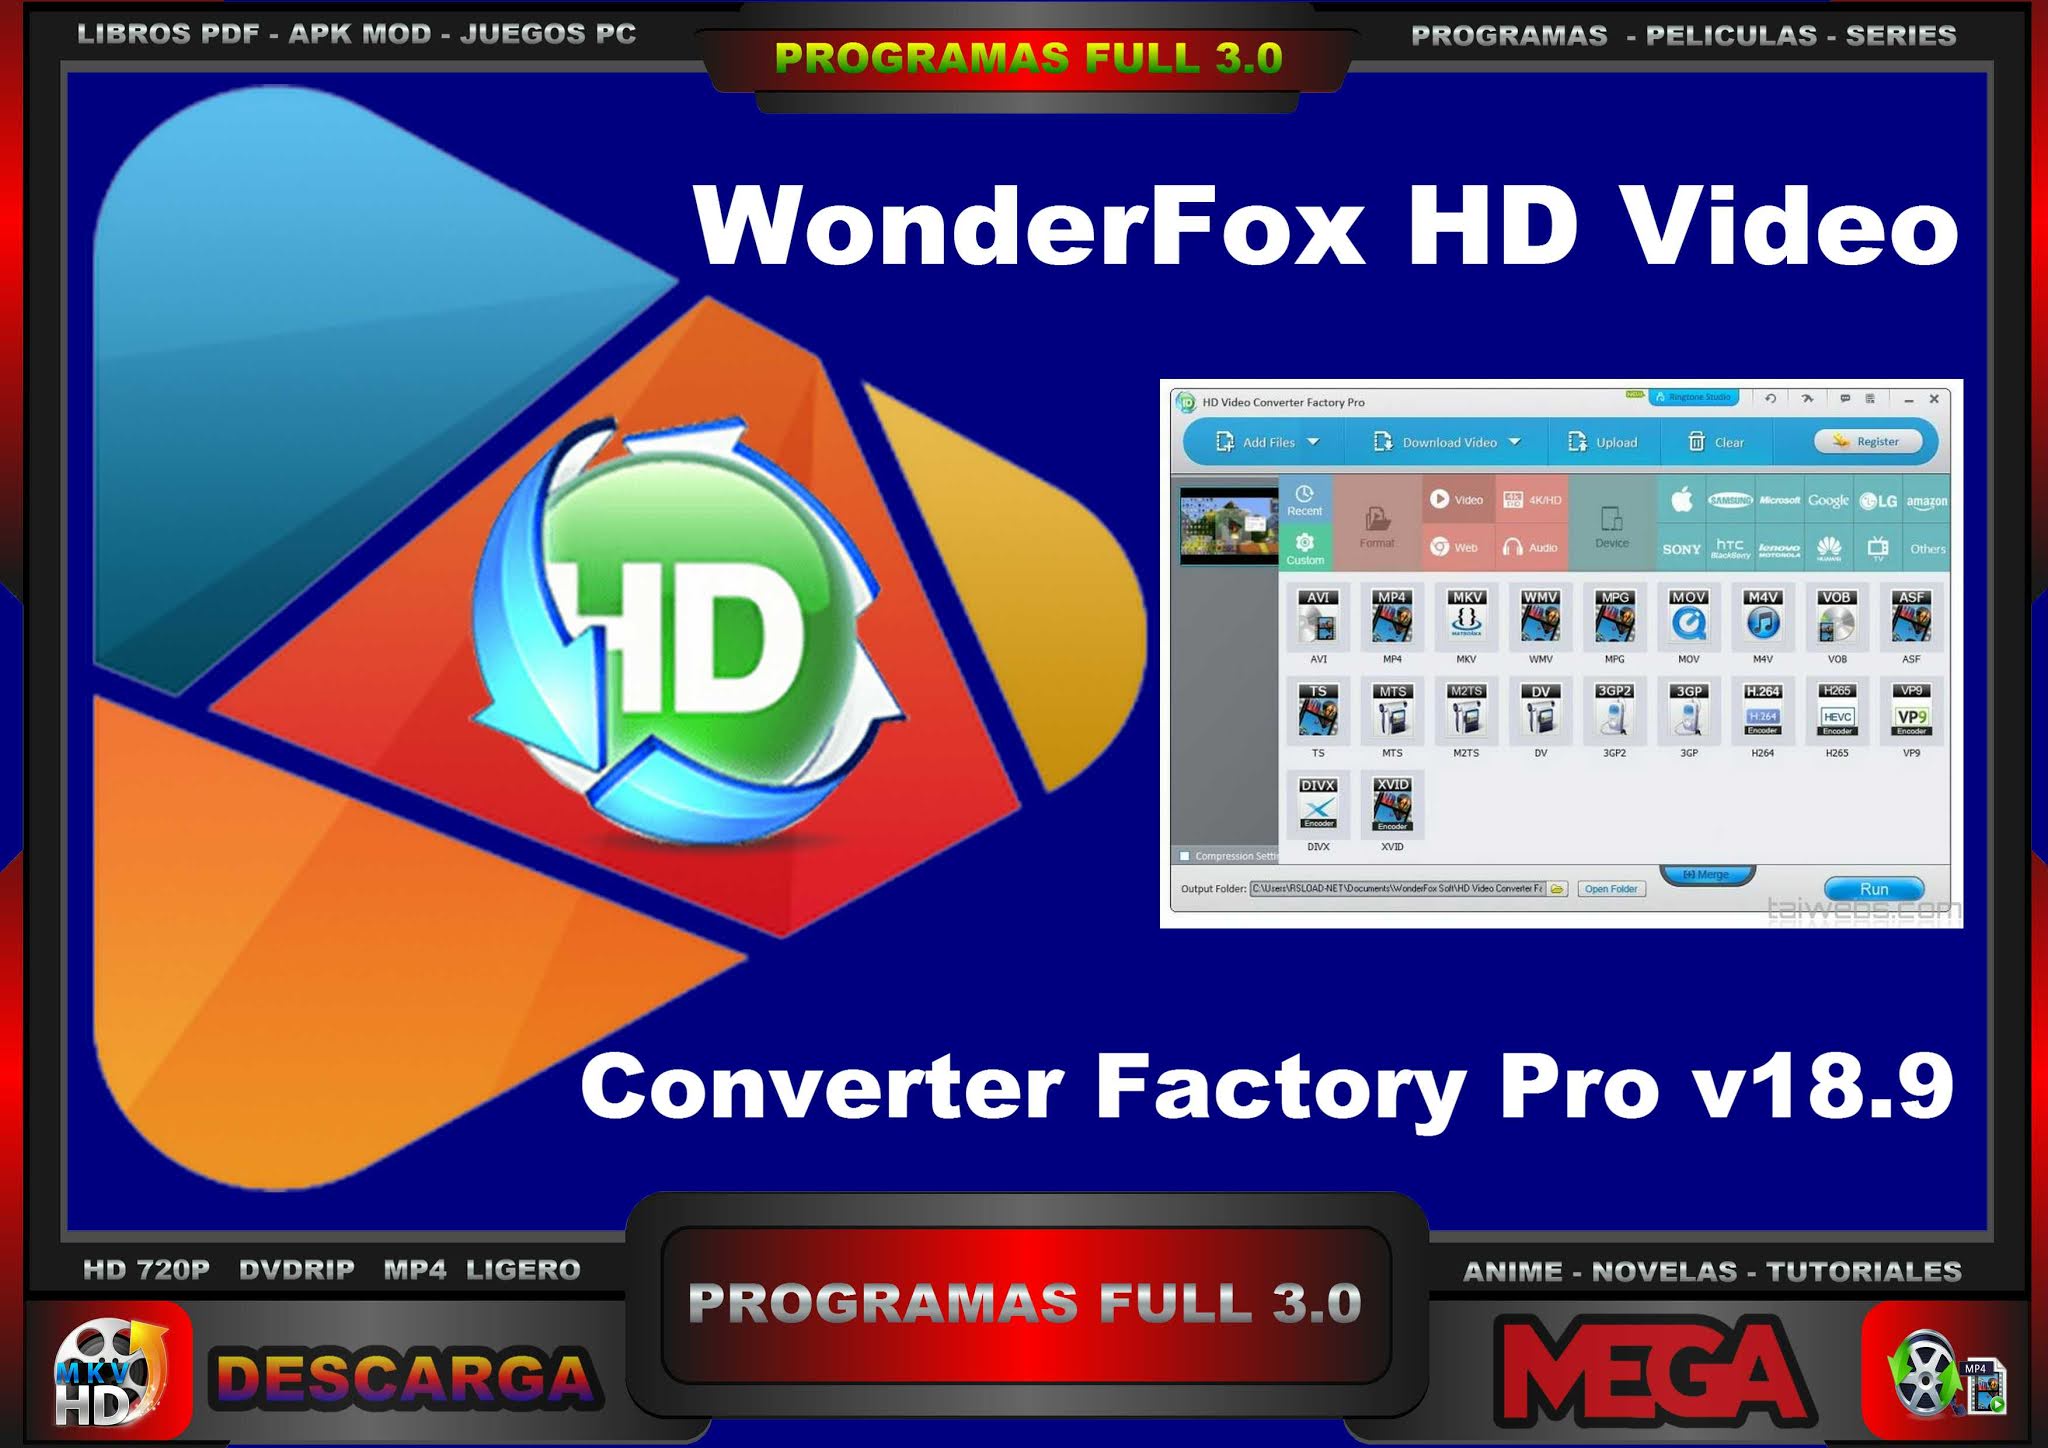 wonderfox hd video converter factory pro copy a dvd movie